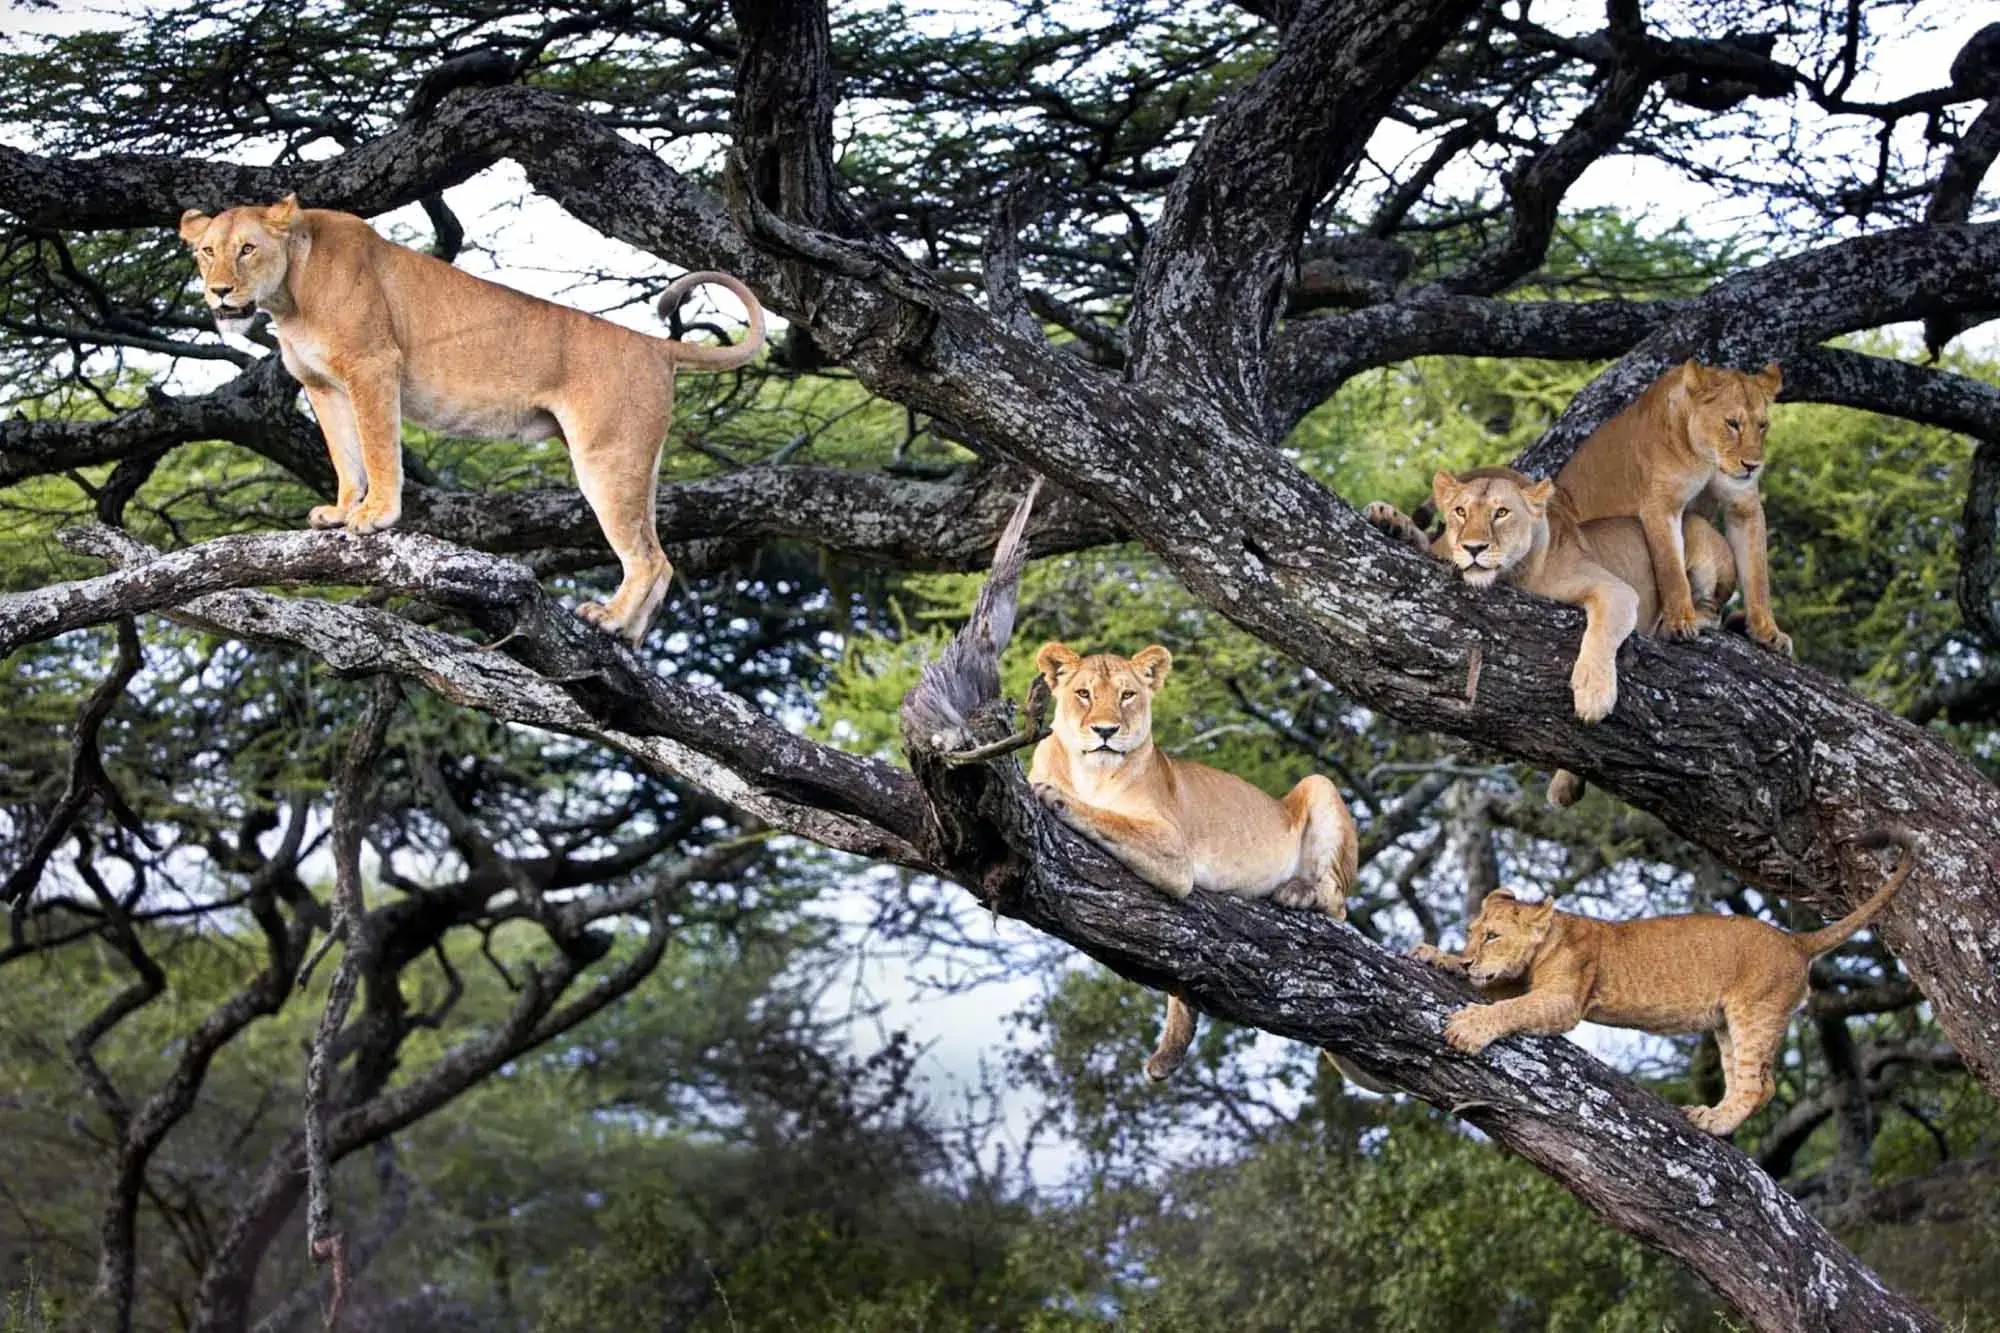 Game drives and gorilla trekking Uganda safaris - lions up a tree